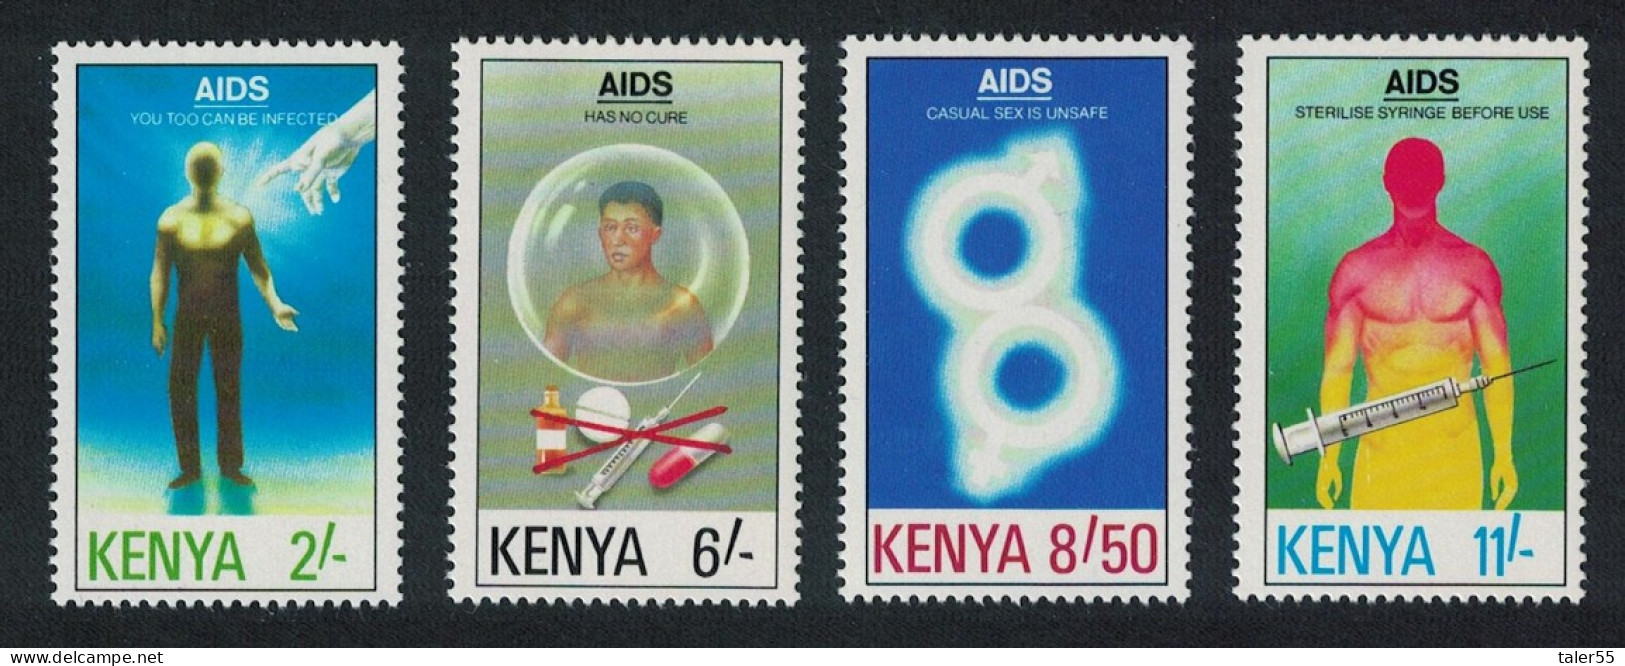 Kenya AIDS Day 4v 1992 MNH SG#561-564 - Kenya (1963-...)